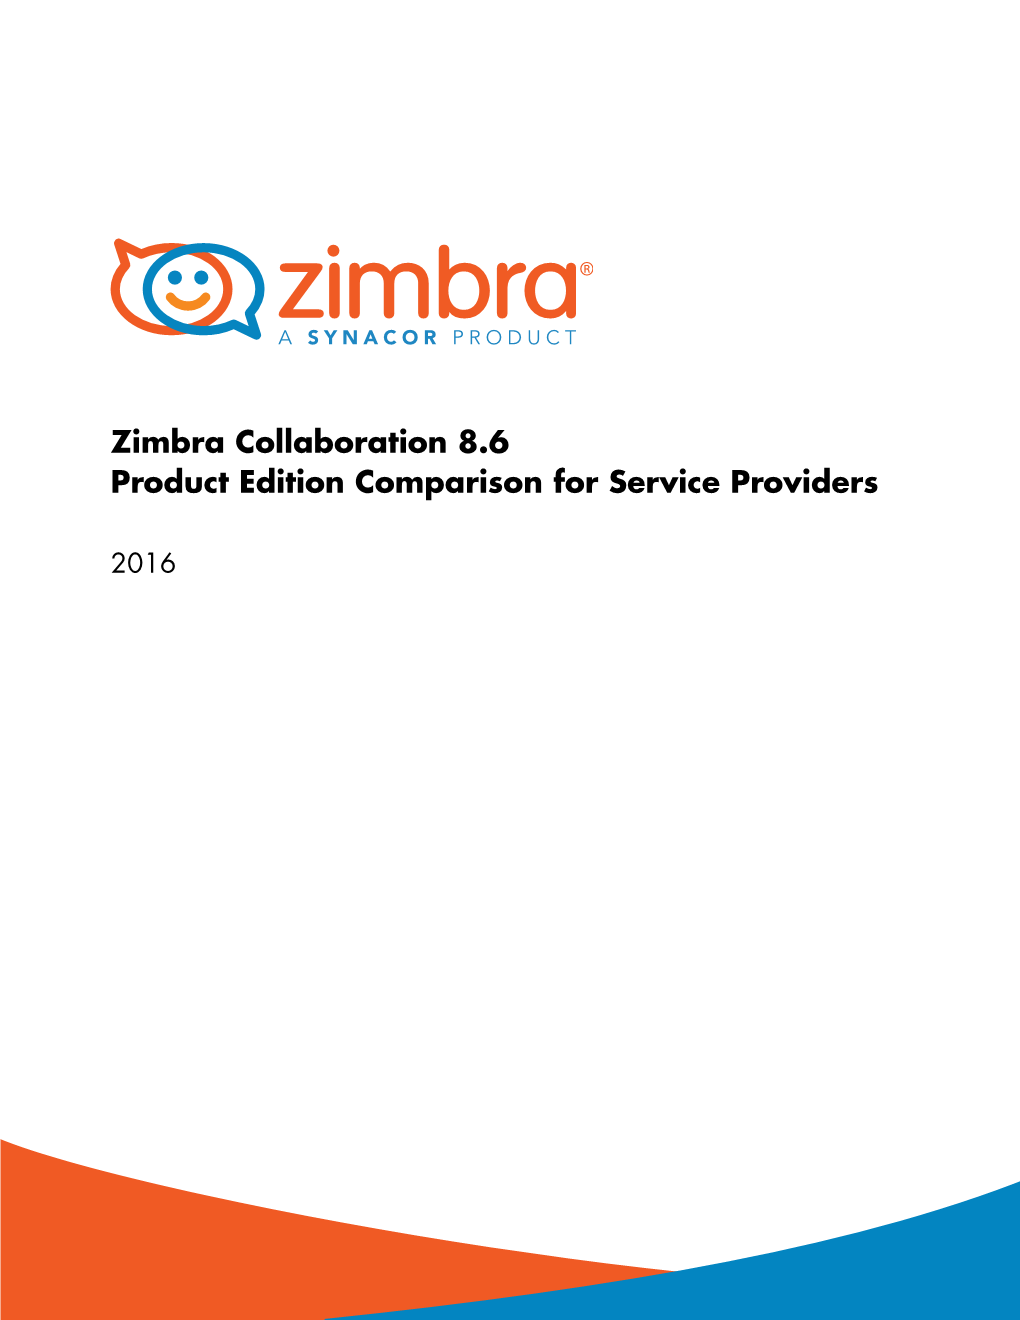 Zimbra Collaboration 8.6 Product Edition Comparison for Service Providers